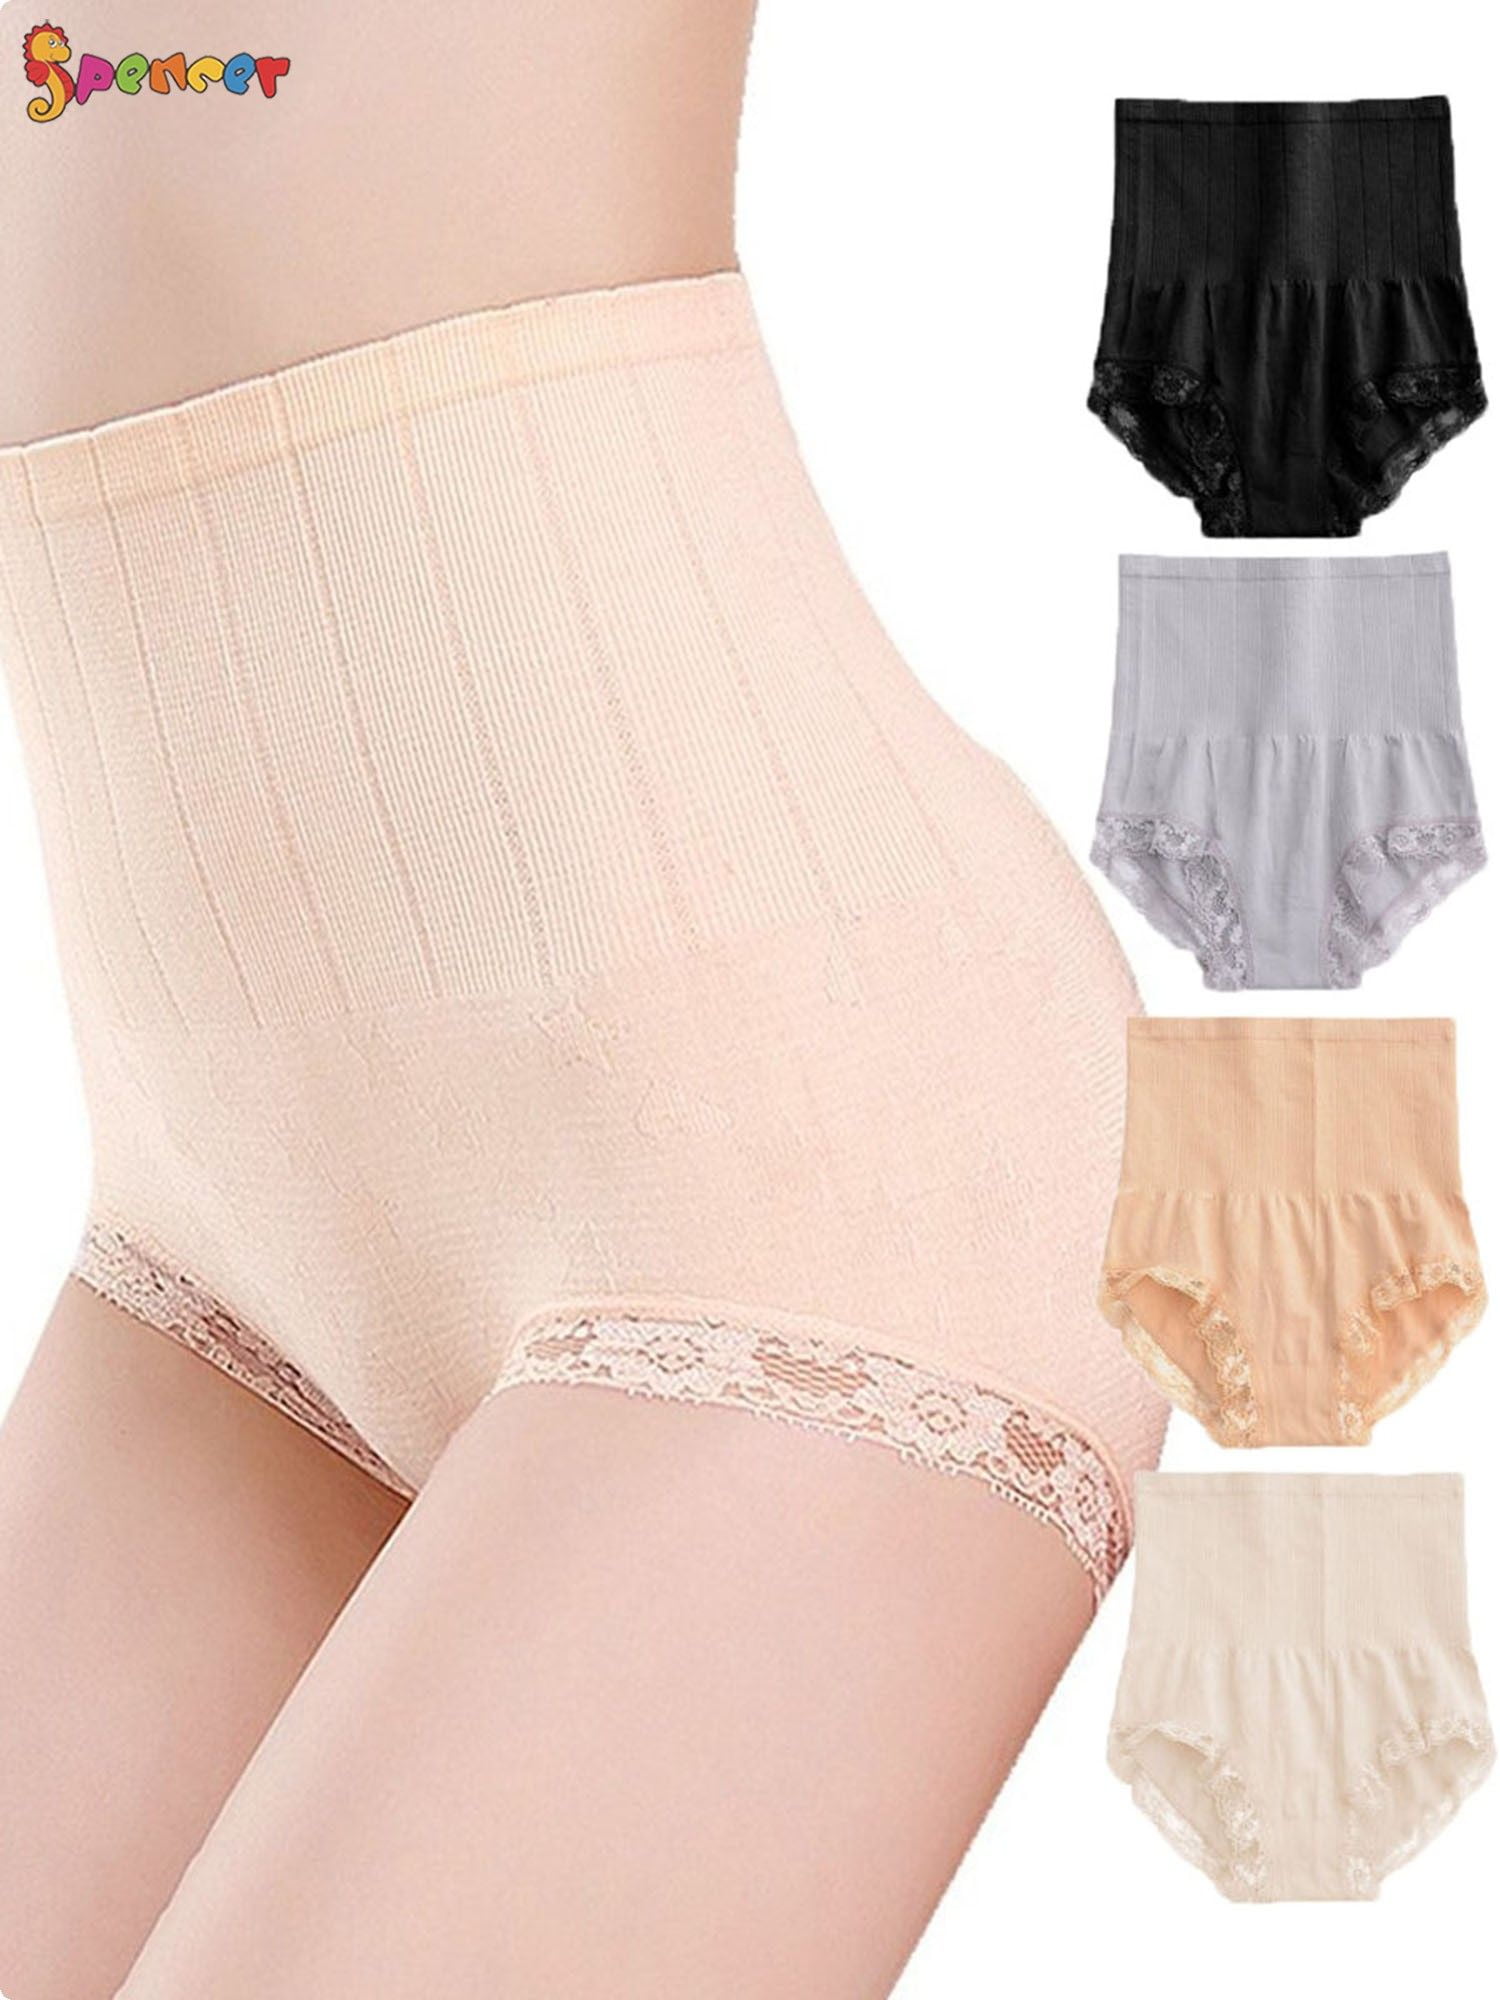 Spencer Women's Thong Shapewear High Waist Cincher Body Shaper Tummy  Control Panties Slimming Briefs M/L,Black